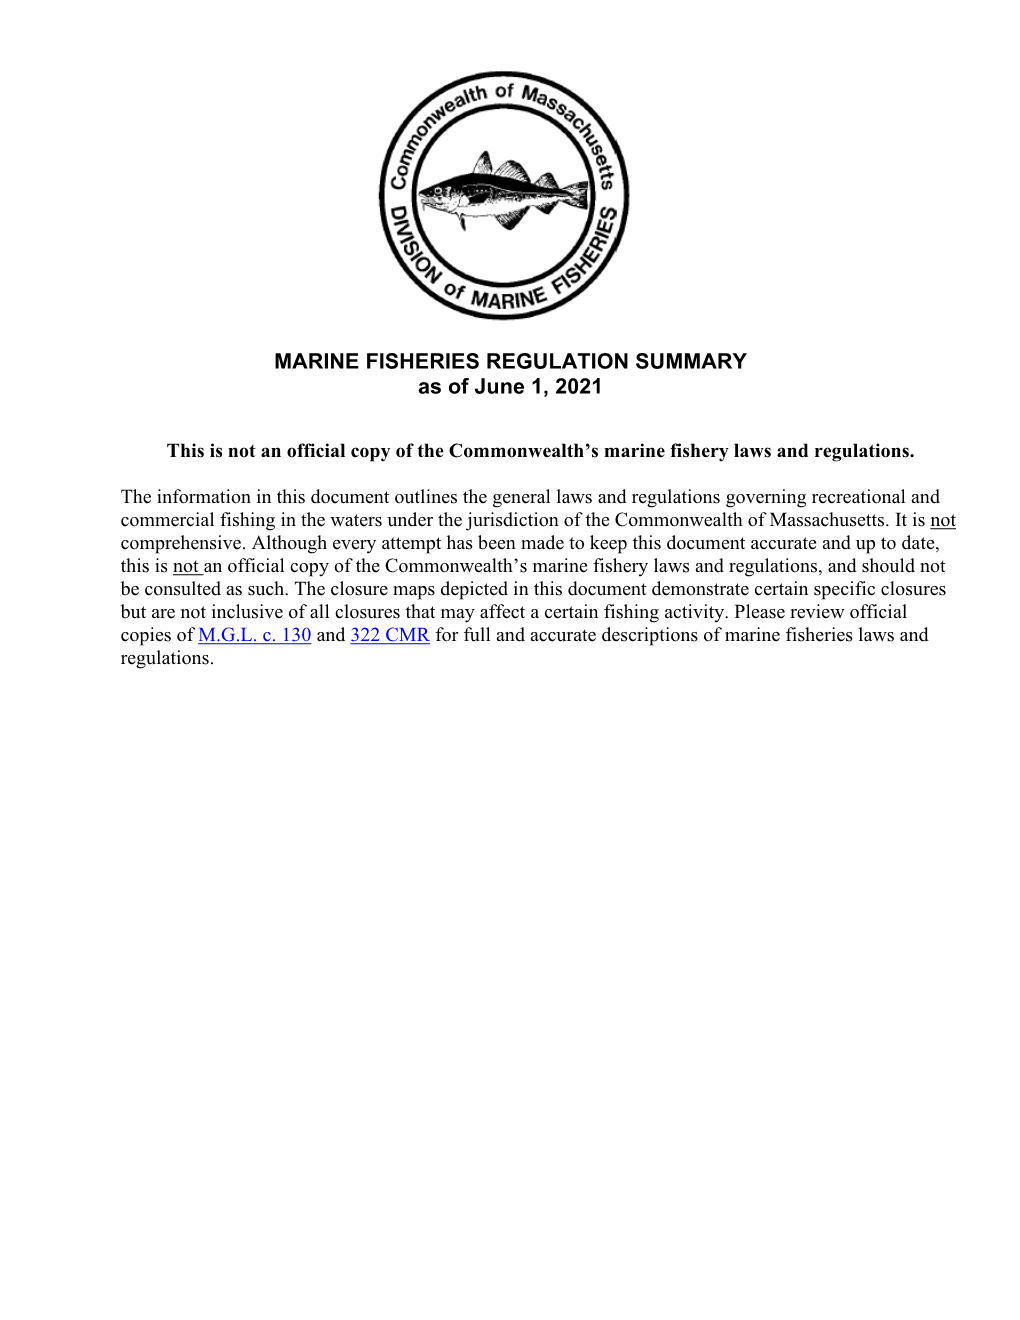 MARINE FISHERIES REGULATION SUMMARY As of June 1, 2021